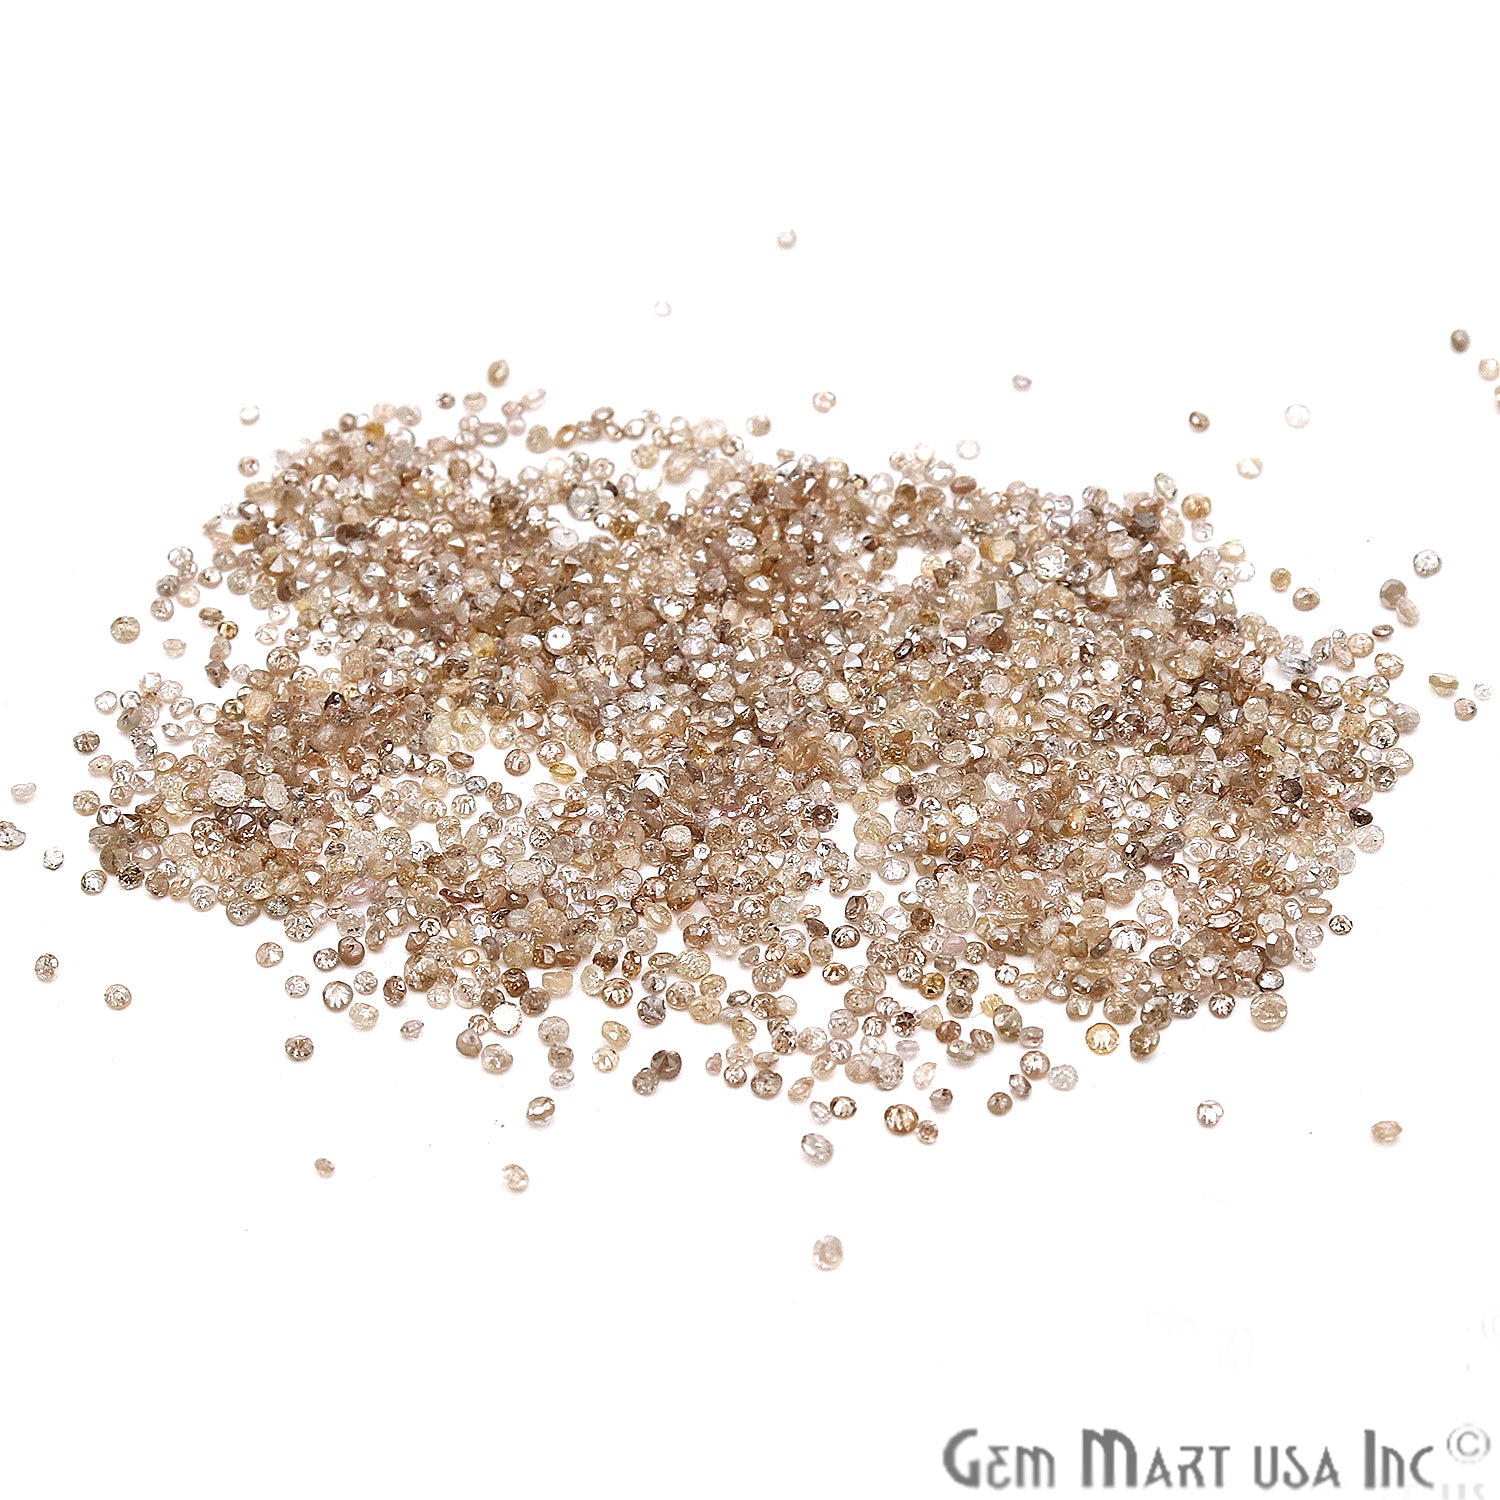 Natural Diamond 1-1.5mm Loose Gemstones - GemMartUSA